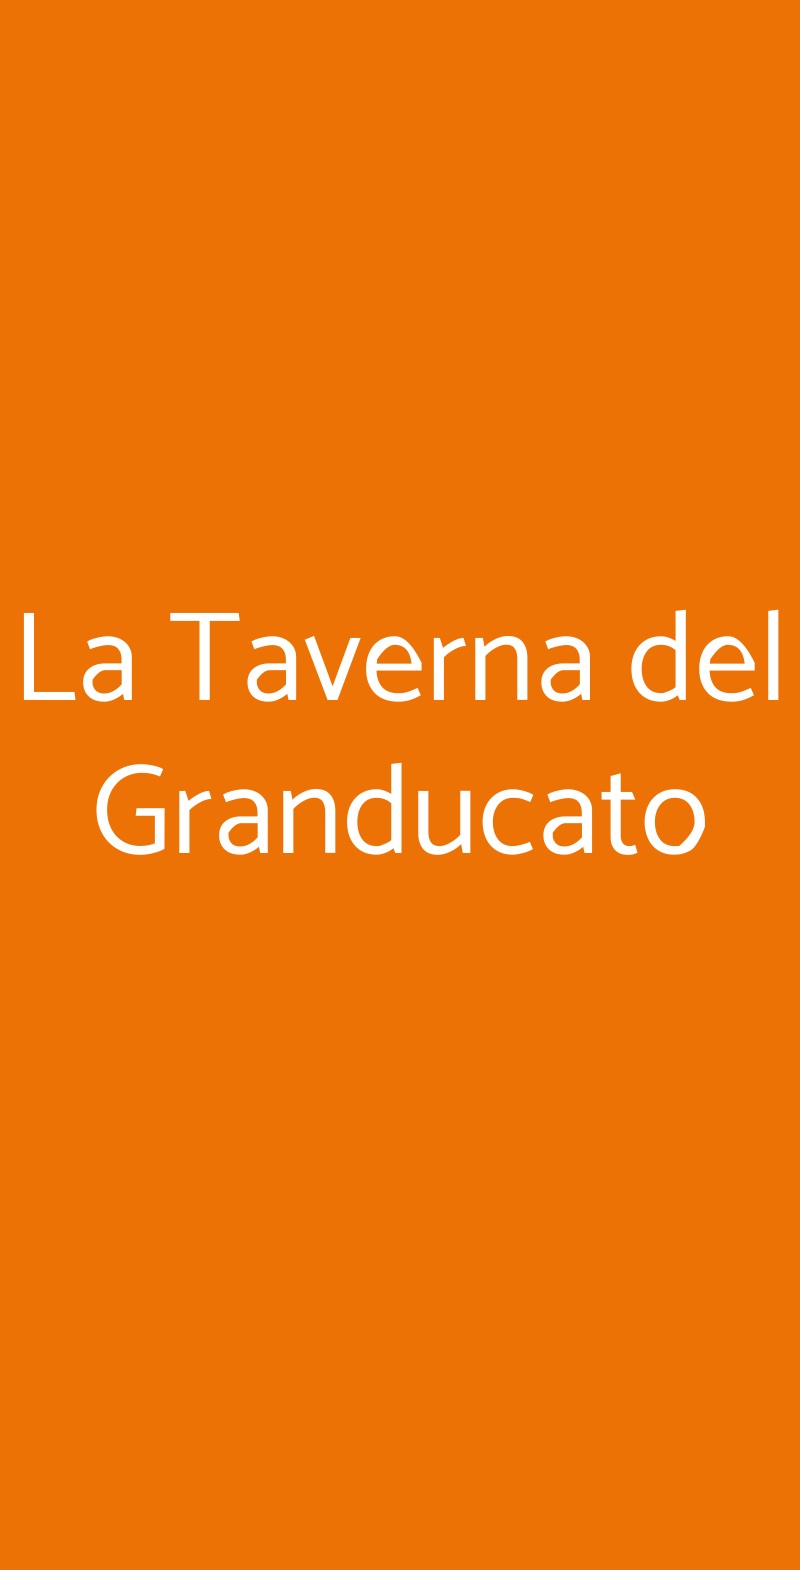 La Taverna del Granducato San Gimignano menù 1 pagina